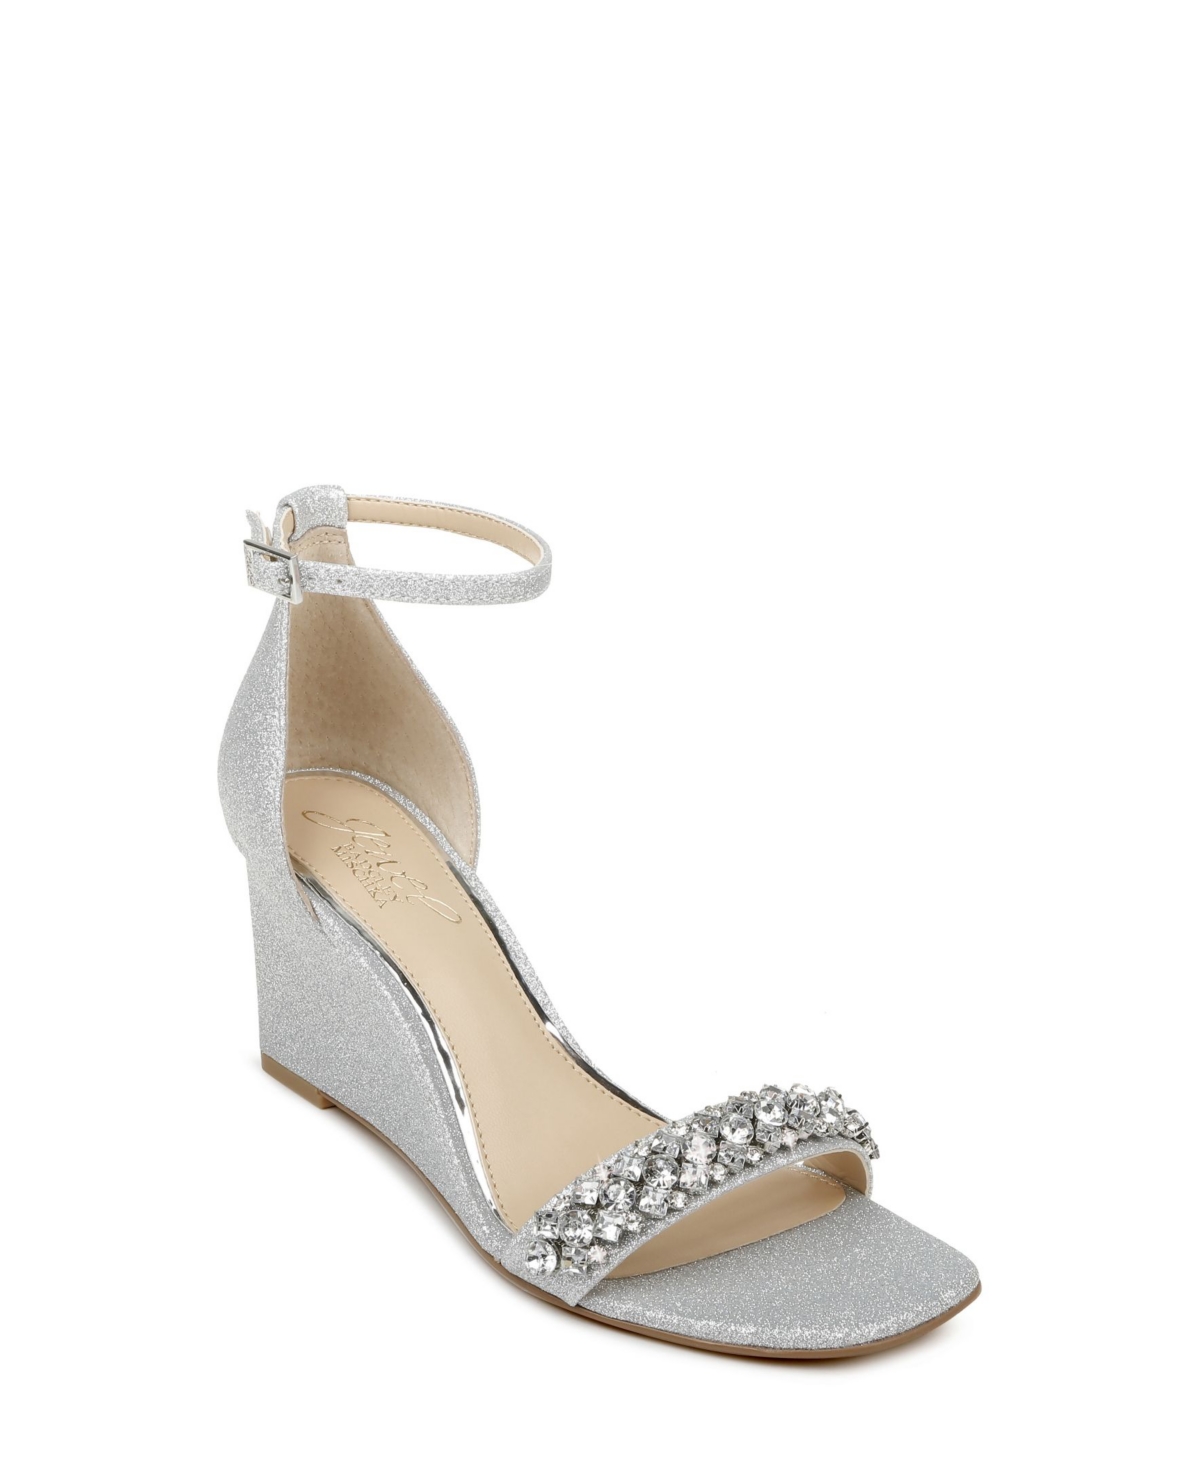 Women's Peggy Wedge Evening Sandals - Silver Glitter